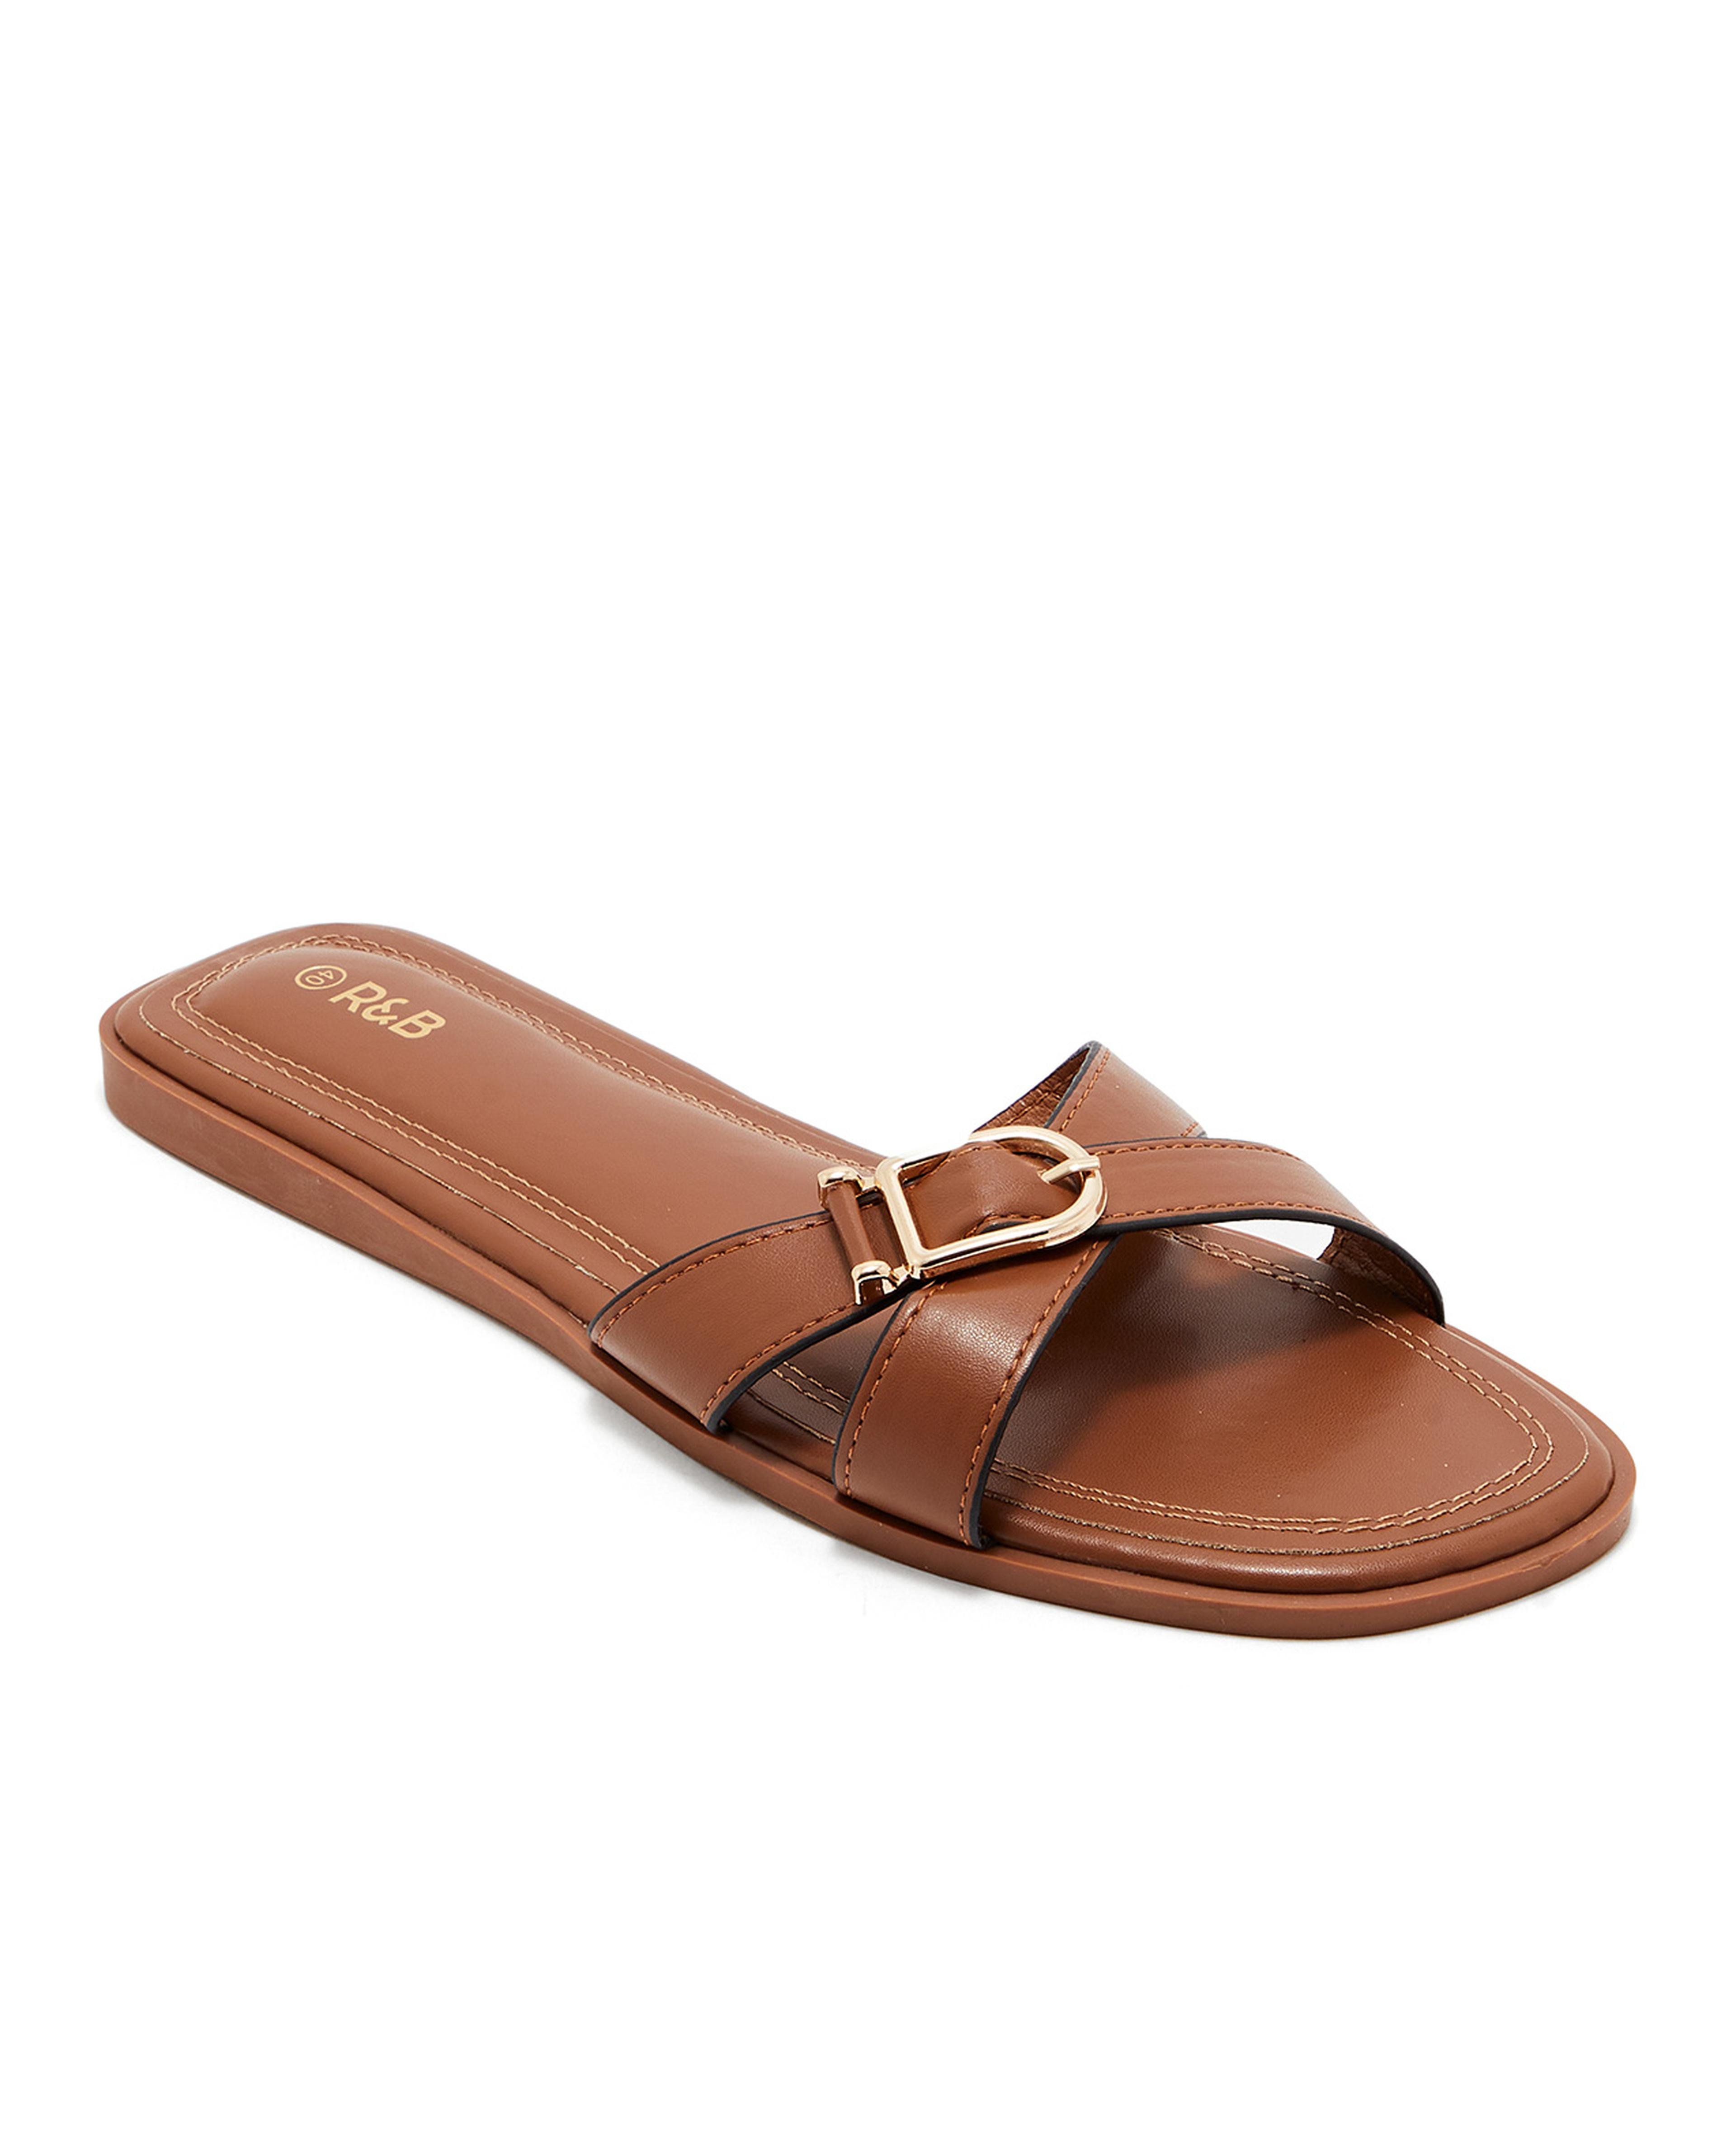 Shop Best Selection Of Sandals Online At Crocsgulf UAE